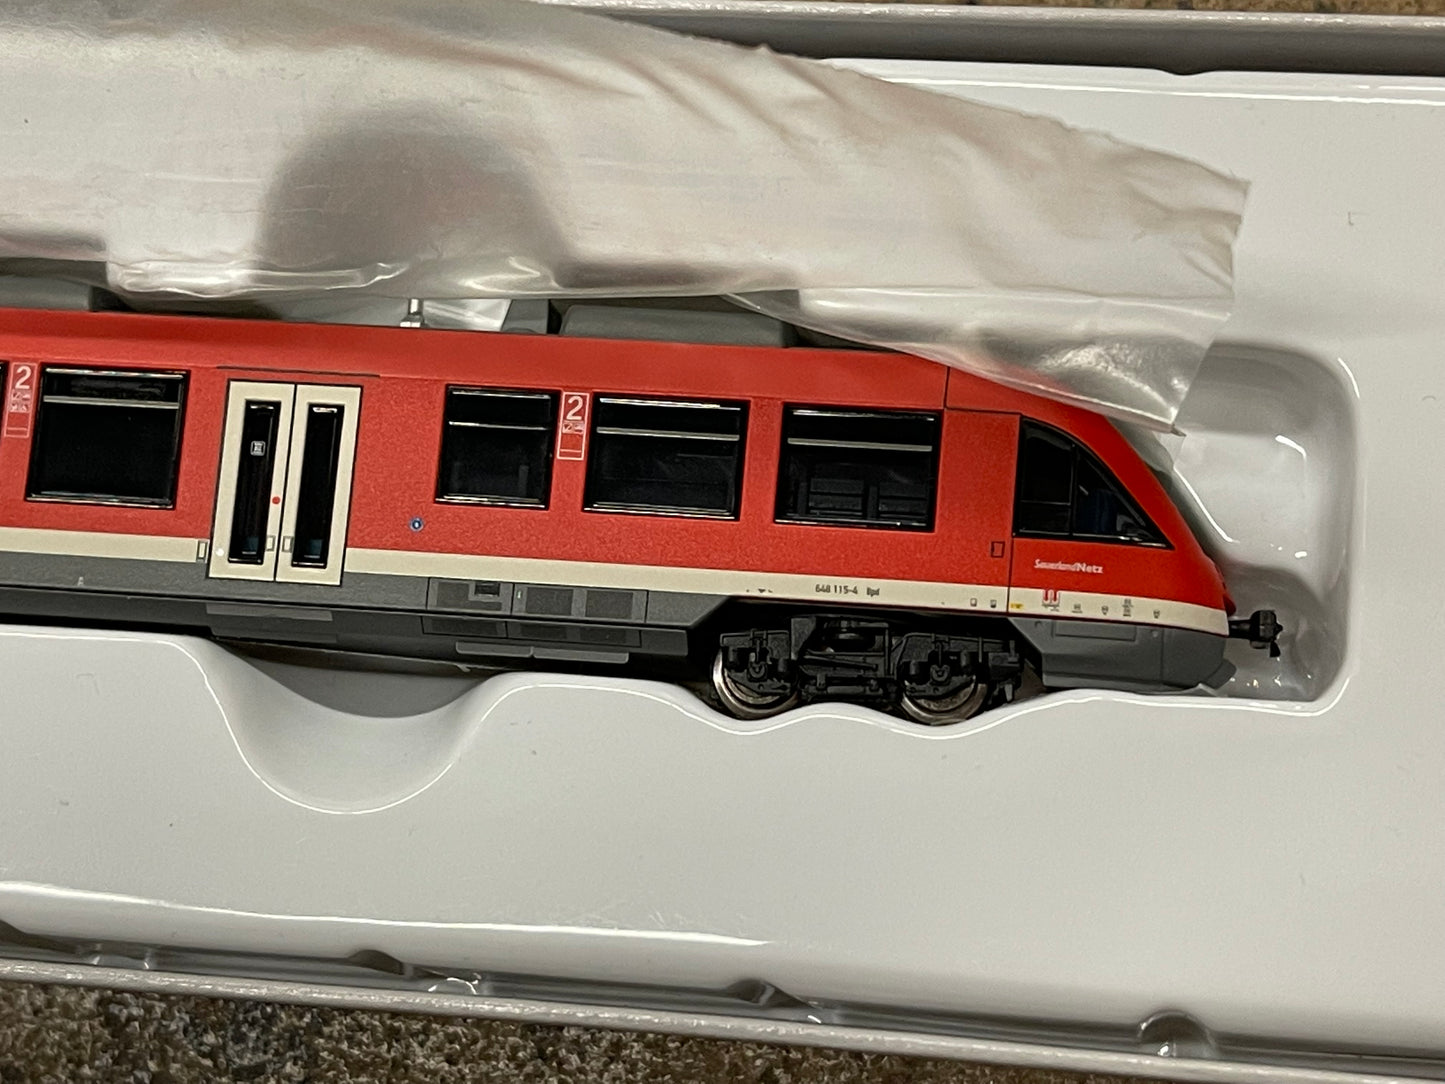 Trix 12587 - LINT Diesel Powered Rail Car Train (Sound)